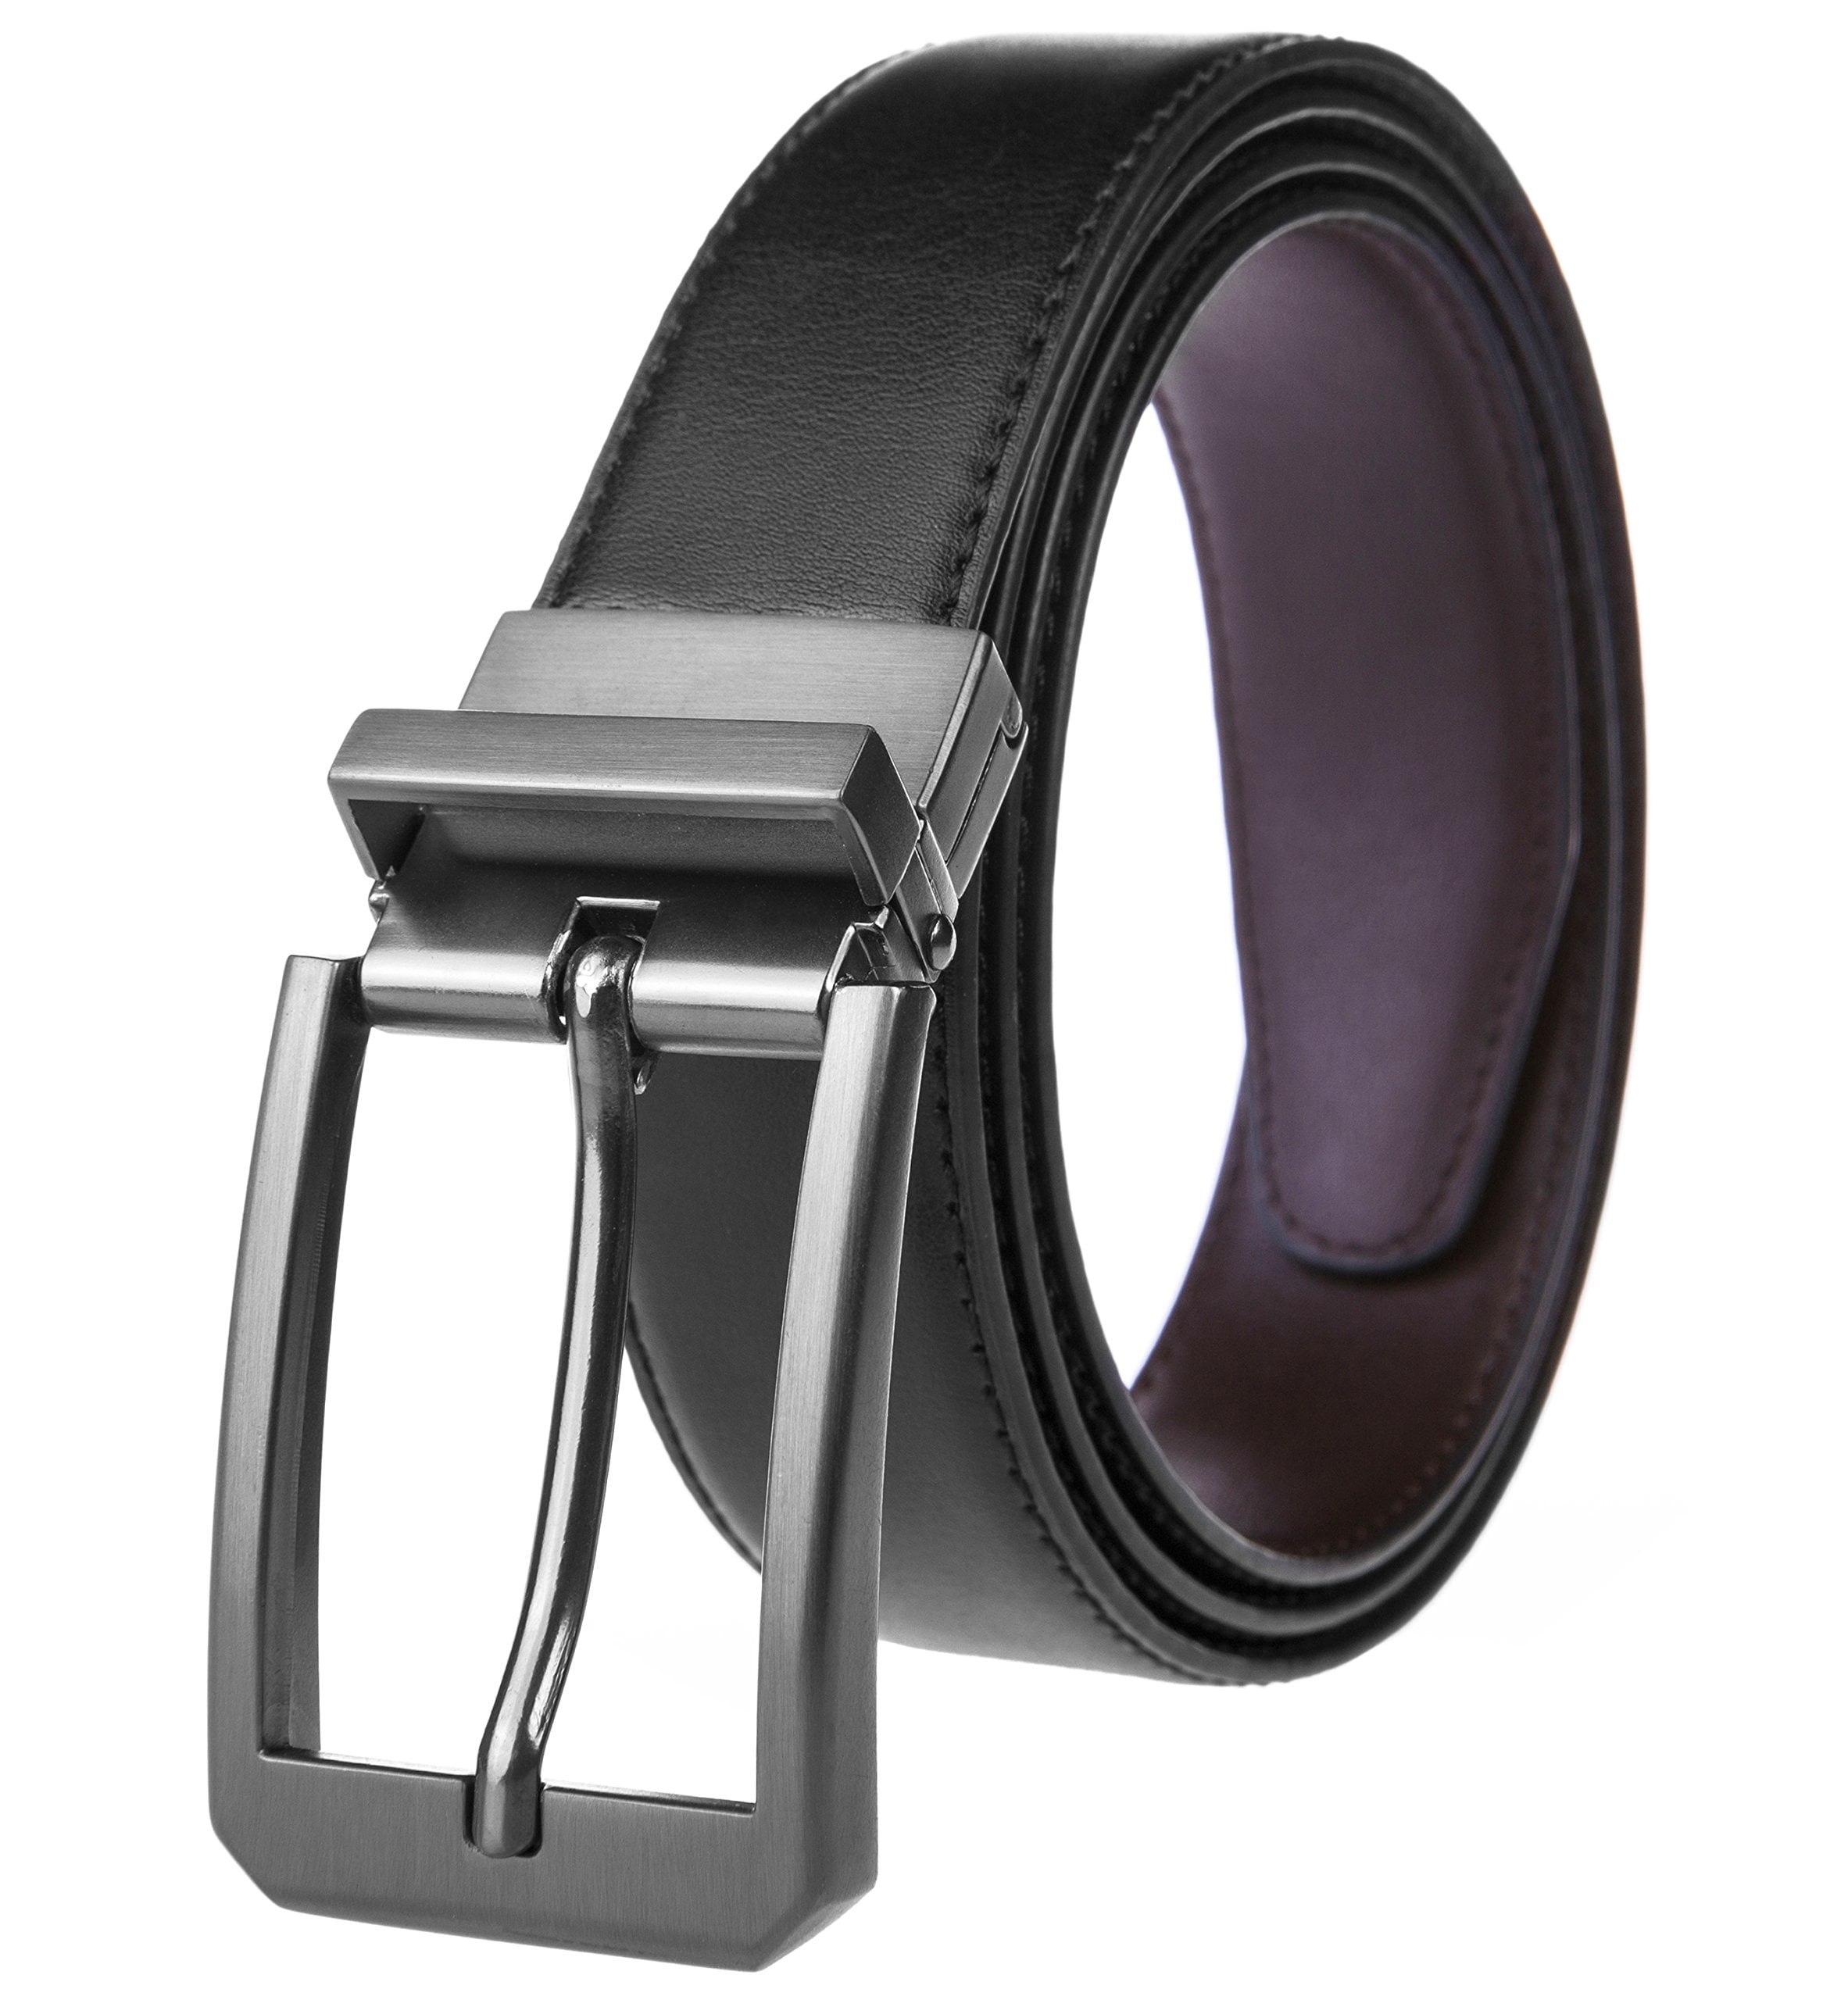 Business Men's Leather Belt Automatic Buckle Belt Black Brown Waist Strap Gift 